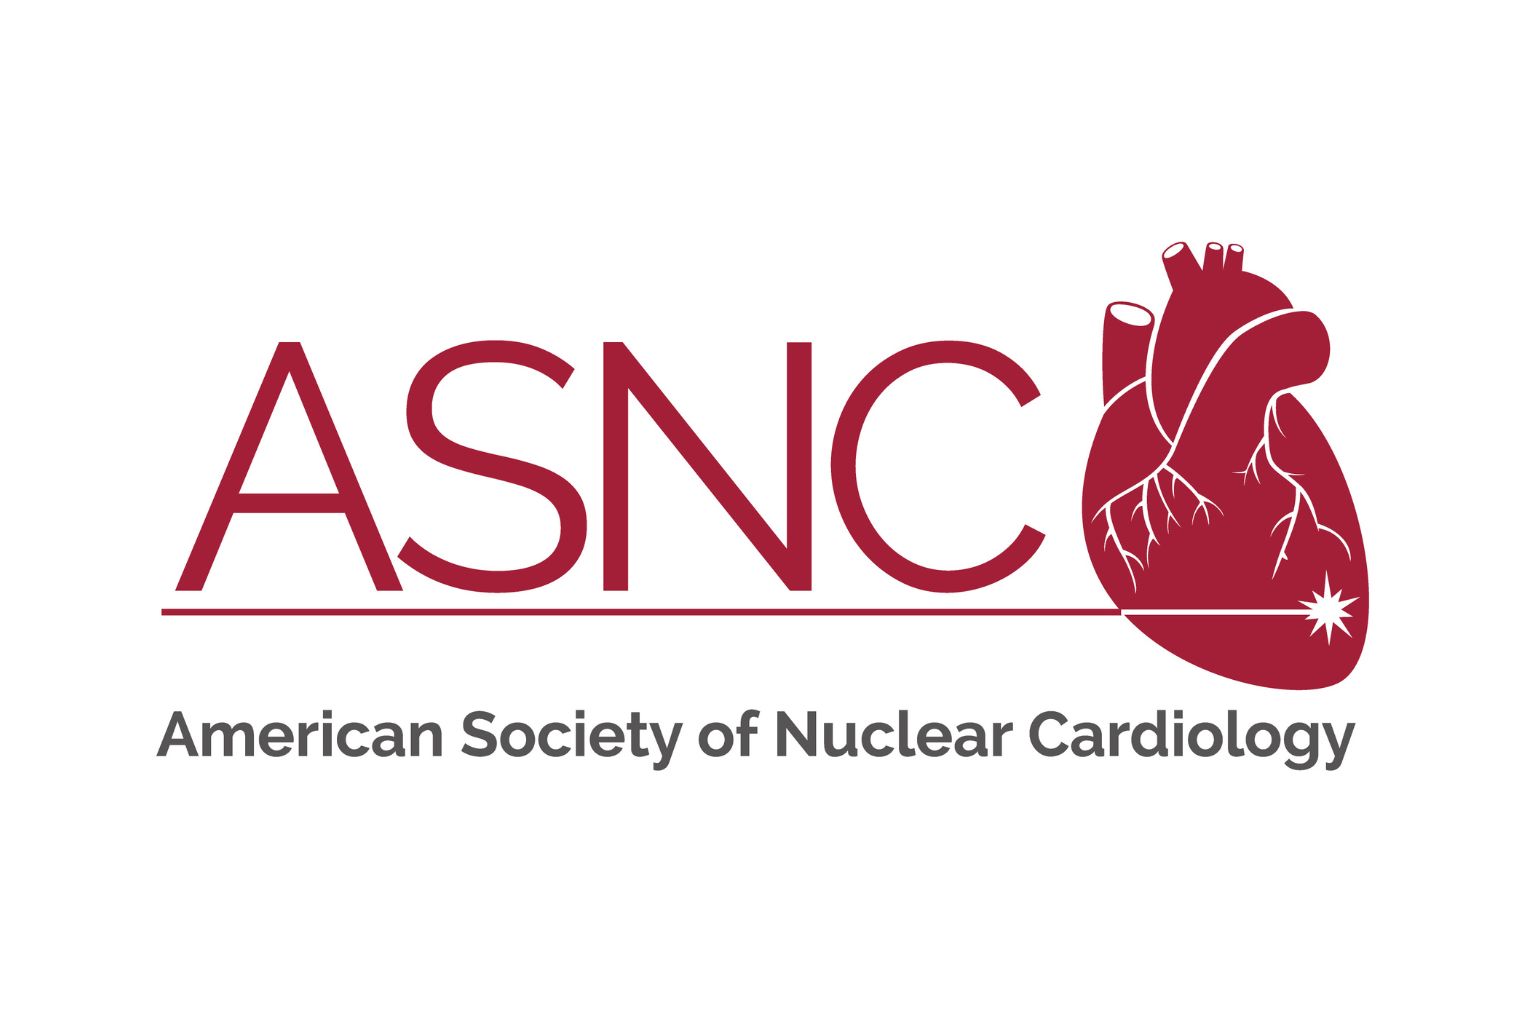 American Society of Nuclear Cardiology logo